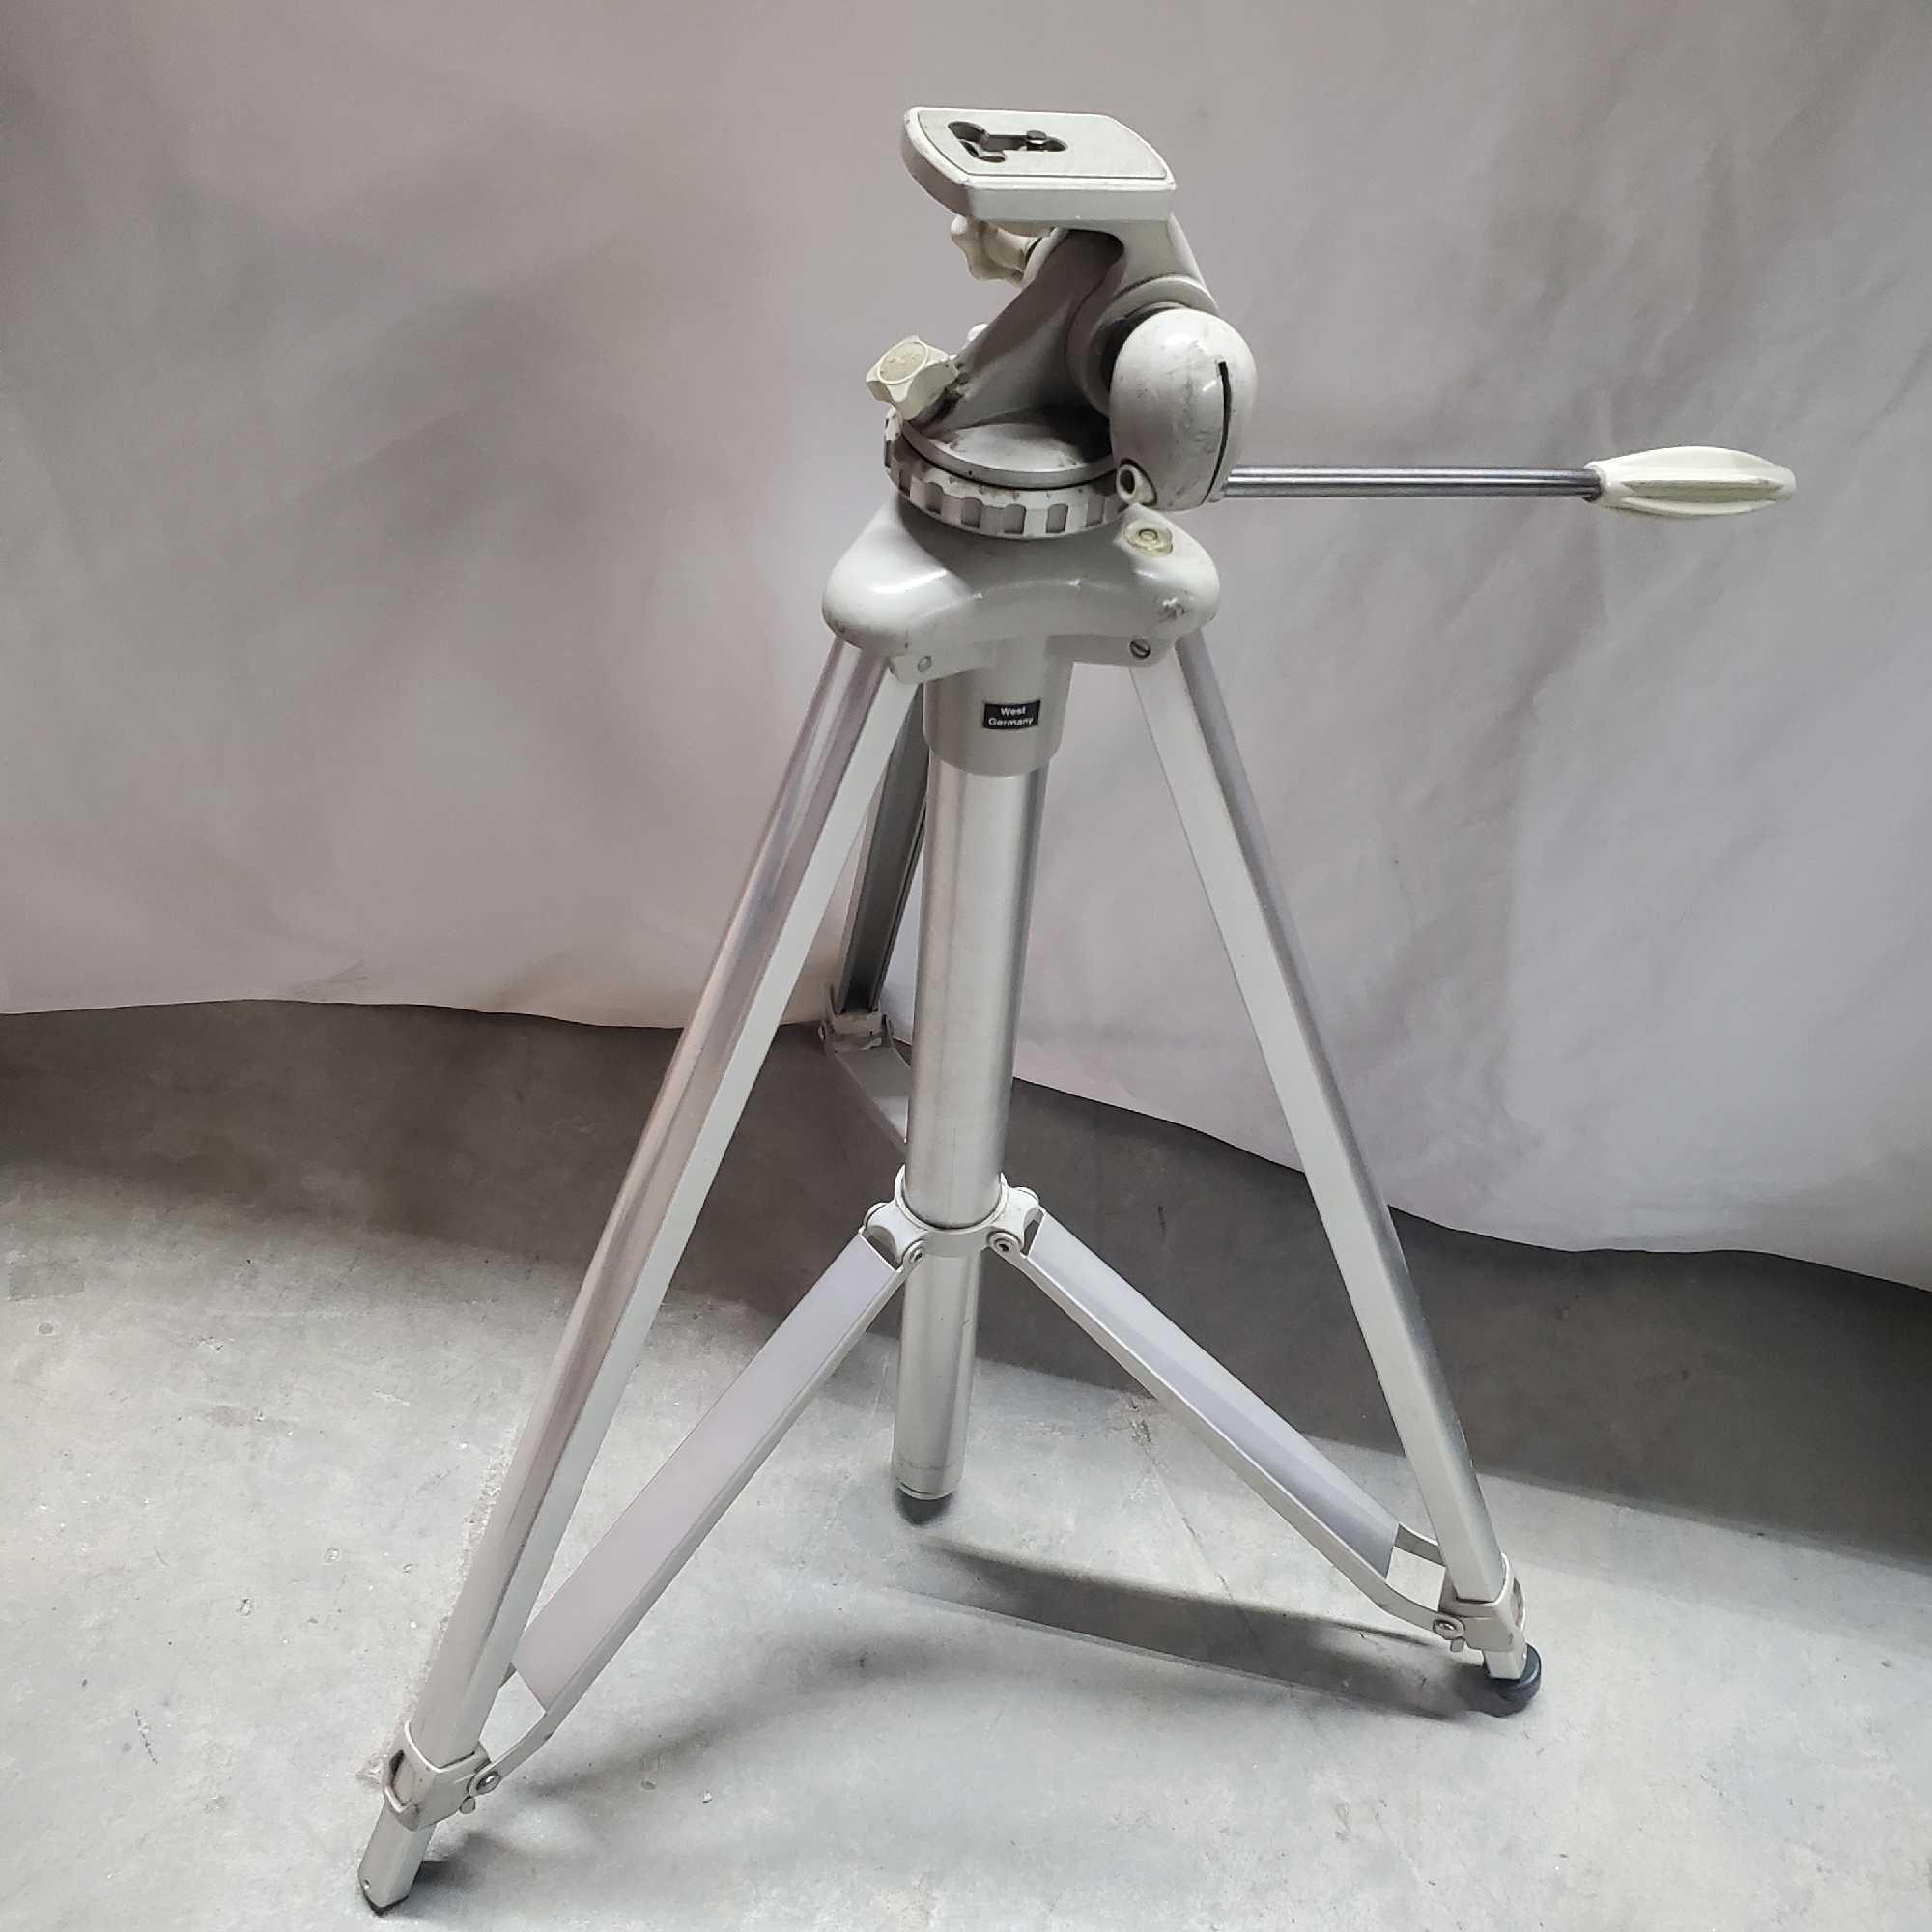 Questar Catadioptric Apochromatic Telescope 3 1/2" With Linhof Tripod Stand